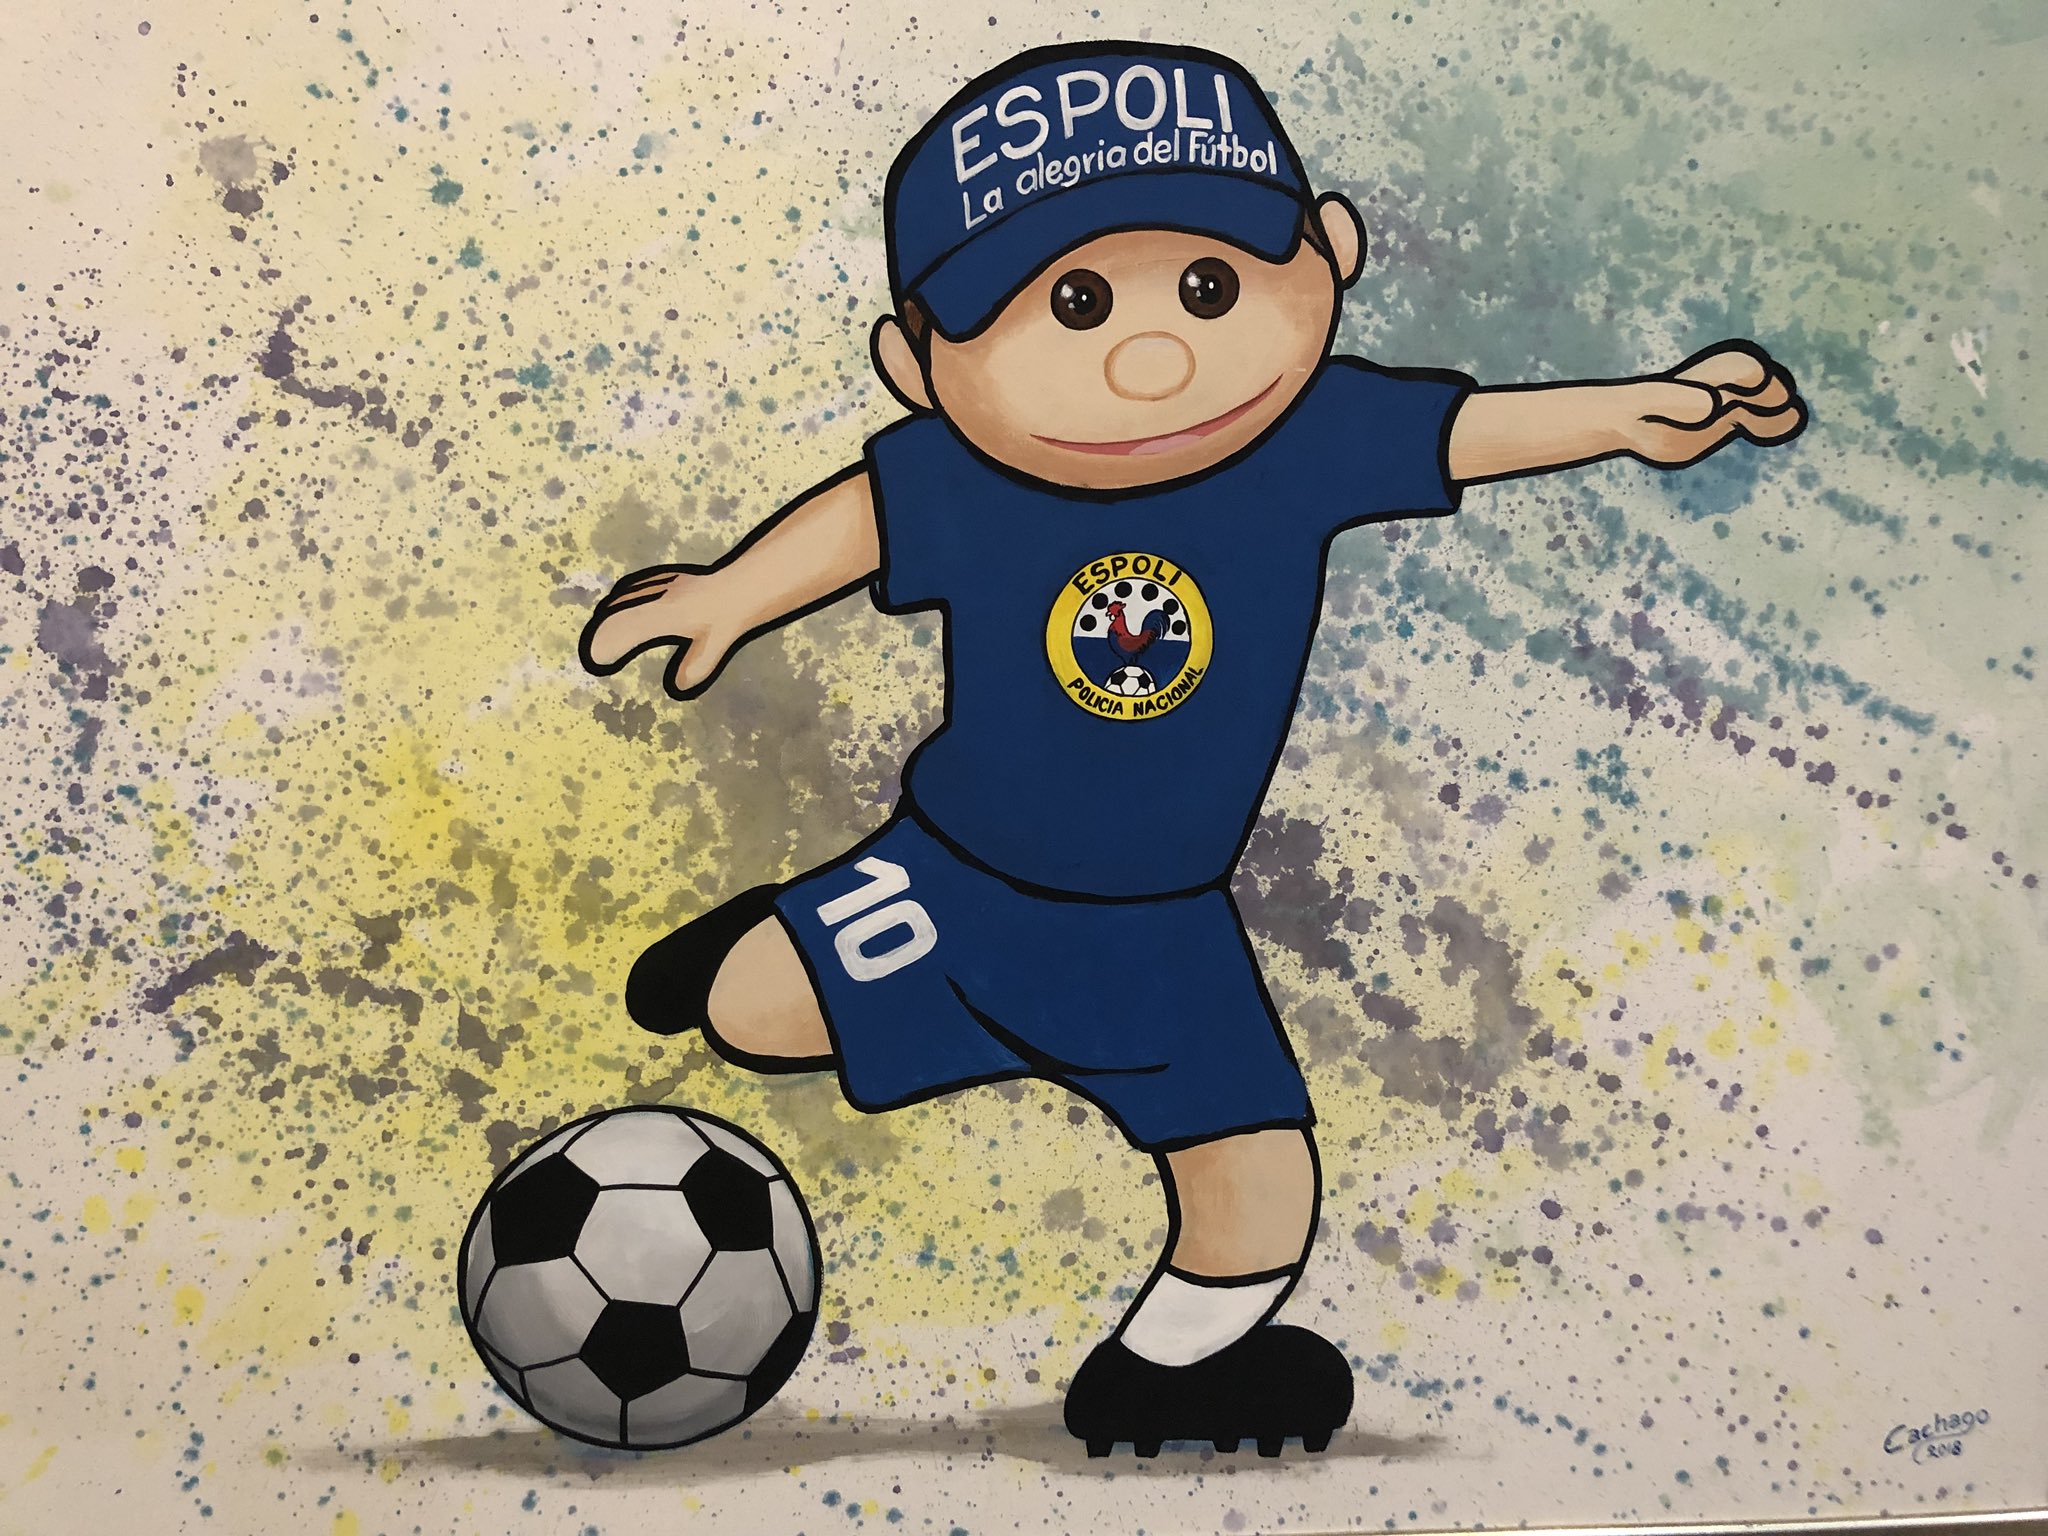 Club Deportivo Espoli (@EspoliClub) / Twitter